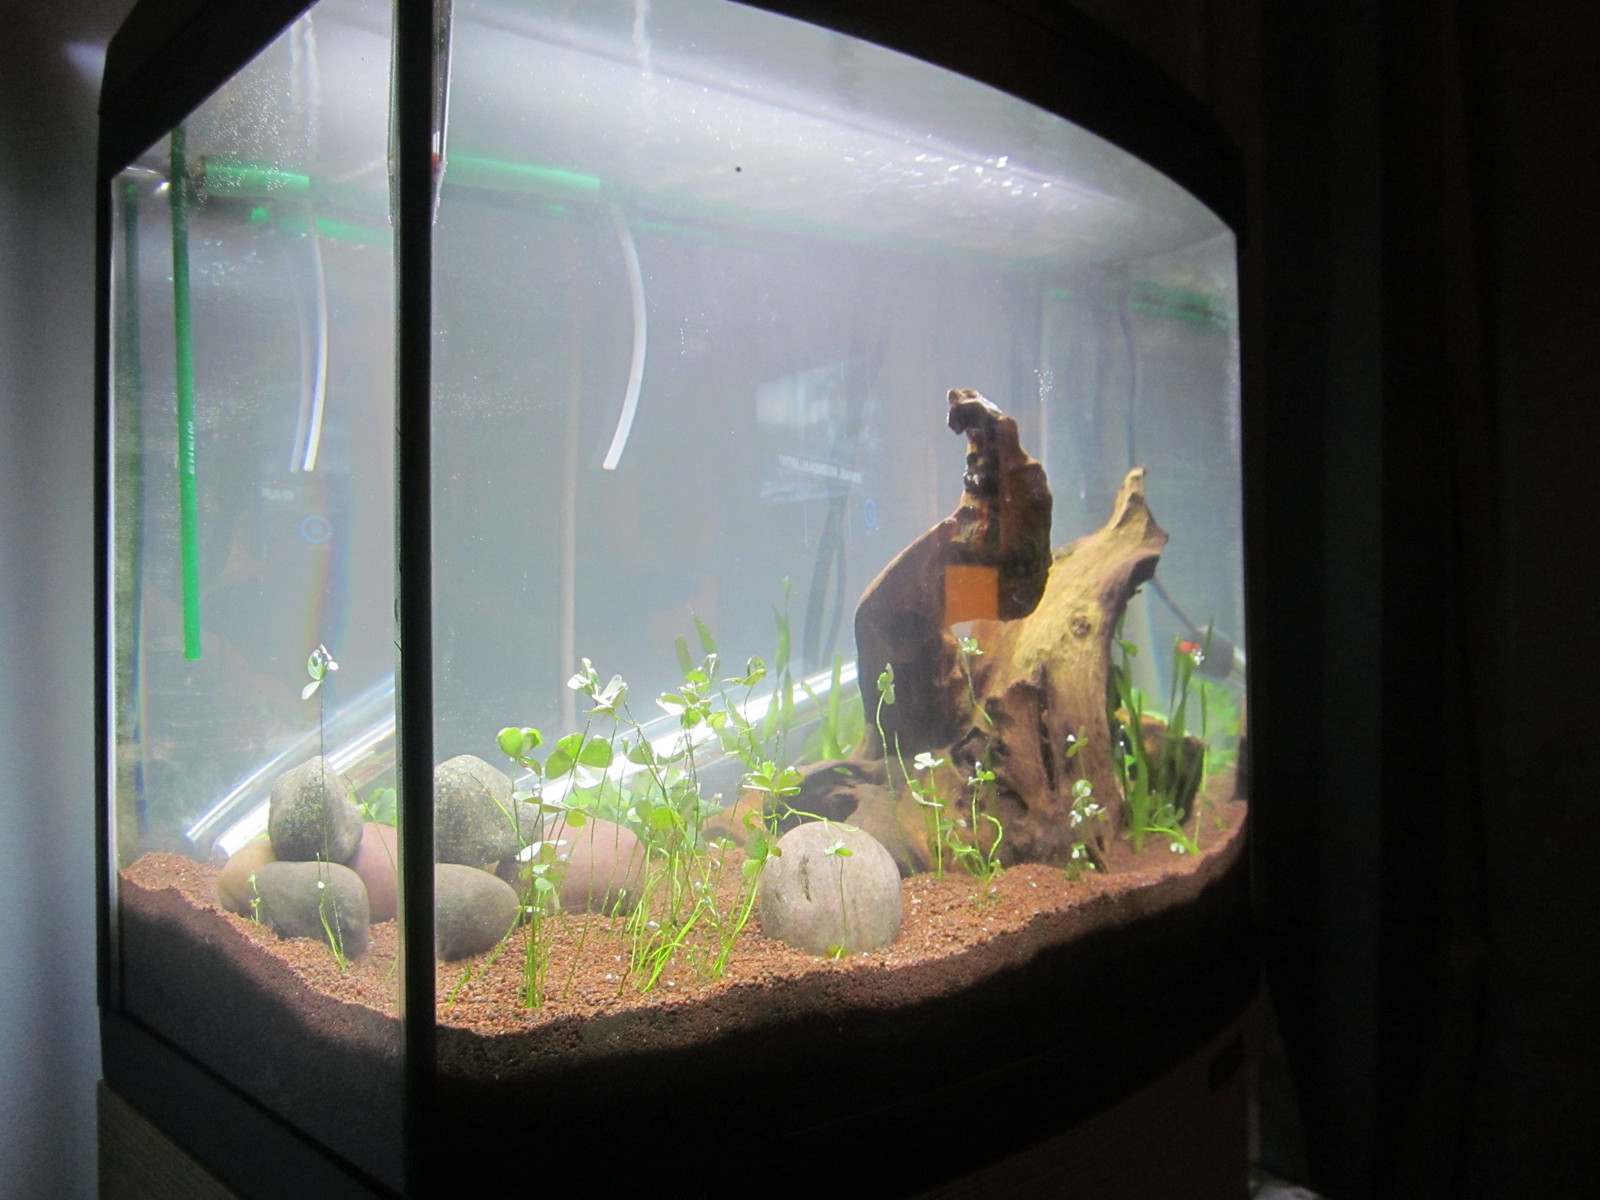 JBL Manado Natural Substrate for Freshwater Aquarium Plant Sand Gravel Fish  Tank